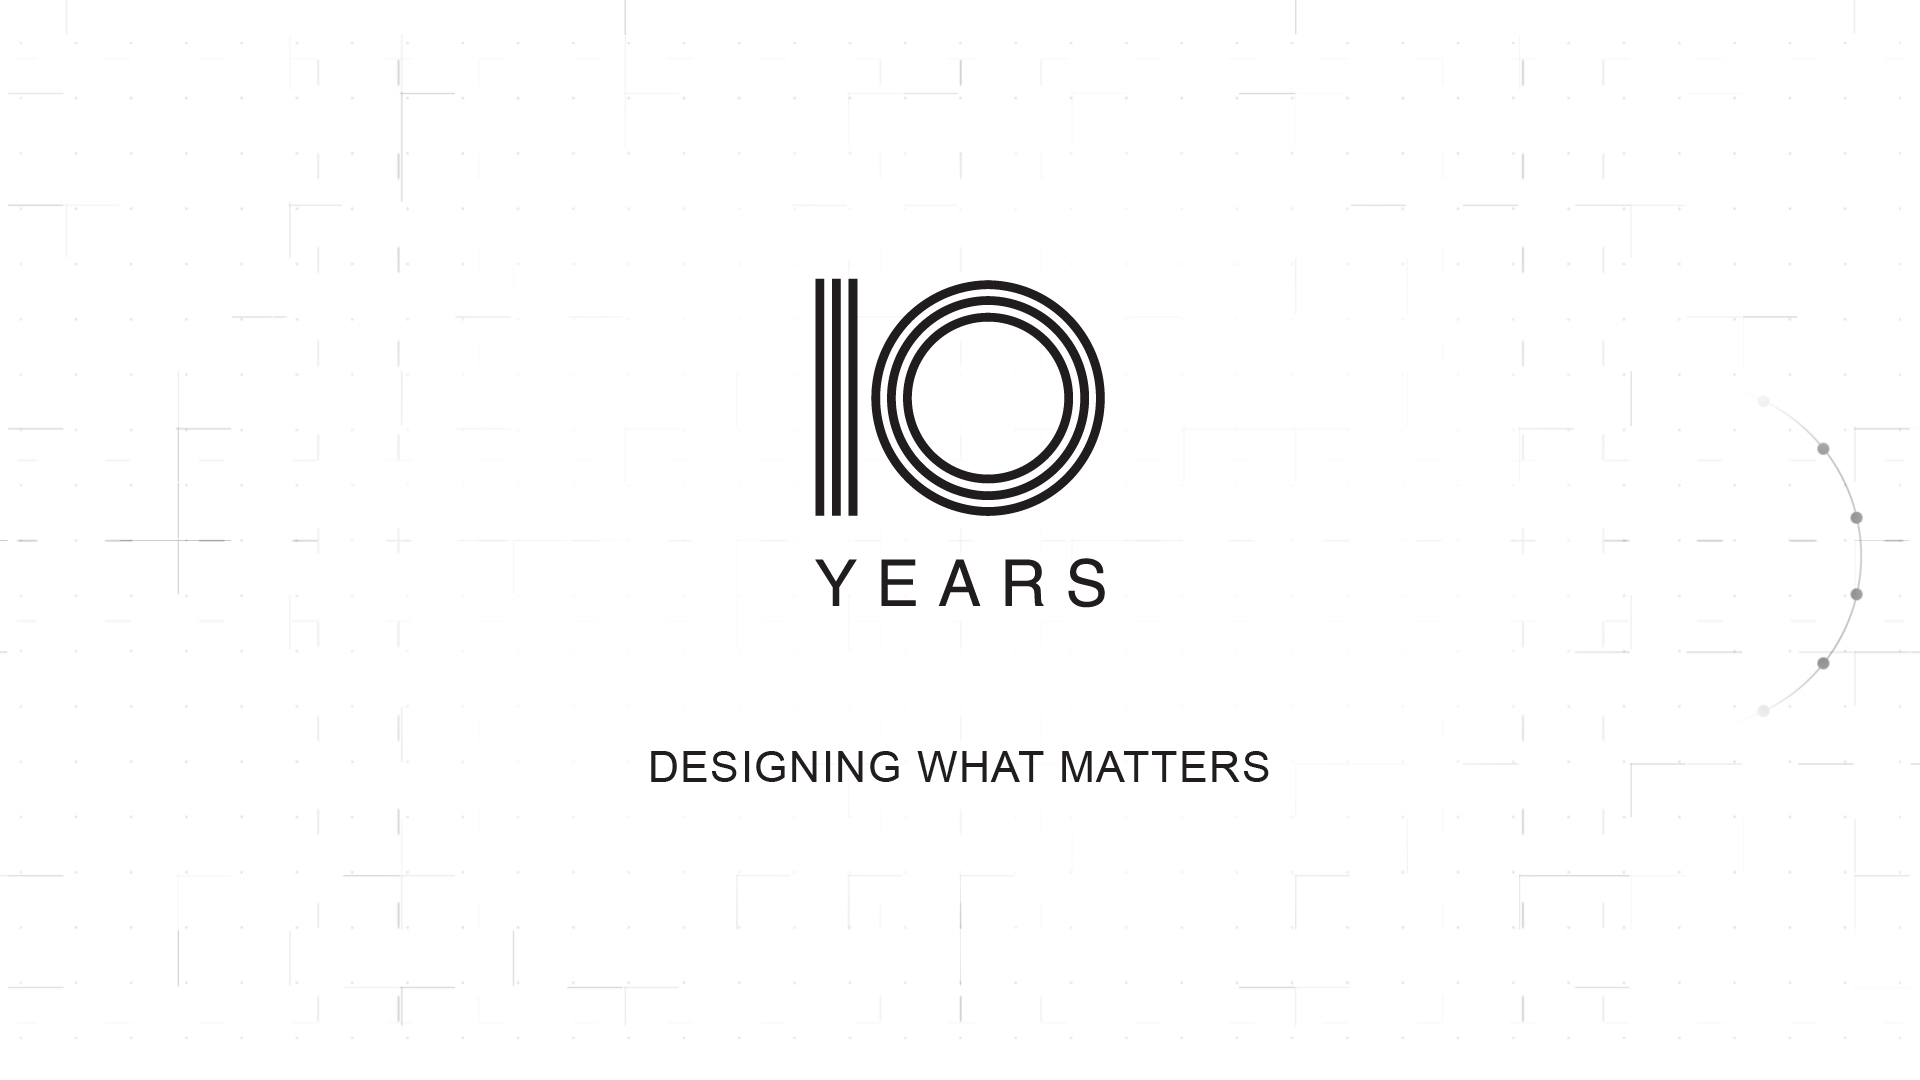 David Visual celebrating 10 years of interior design and branding